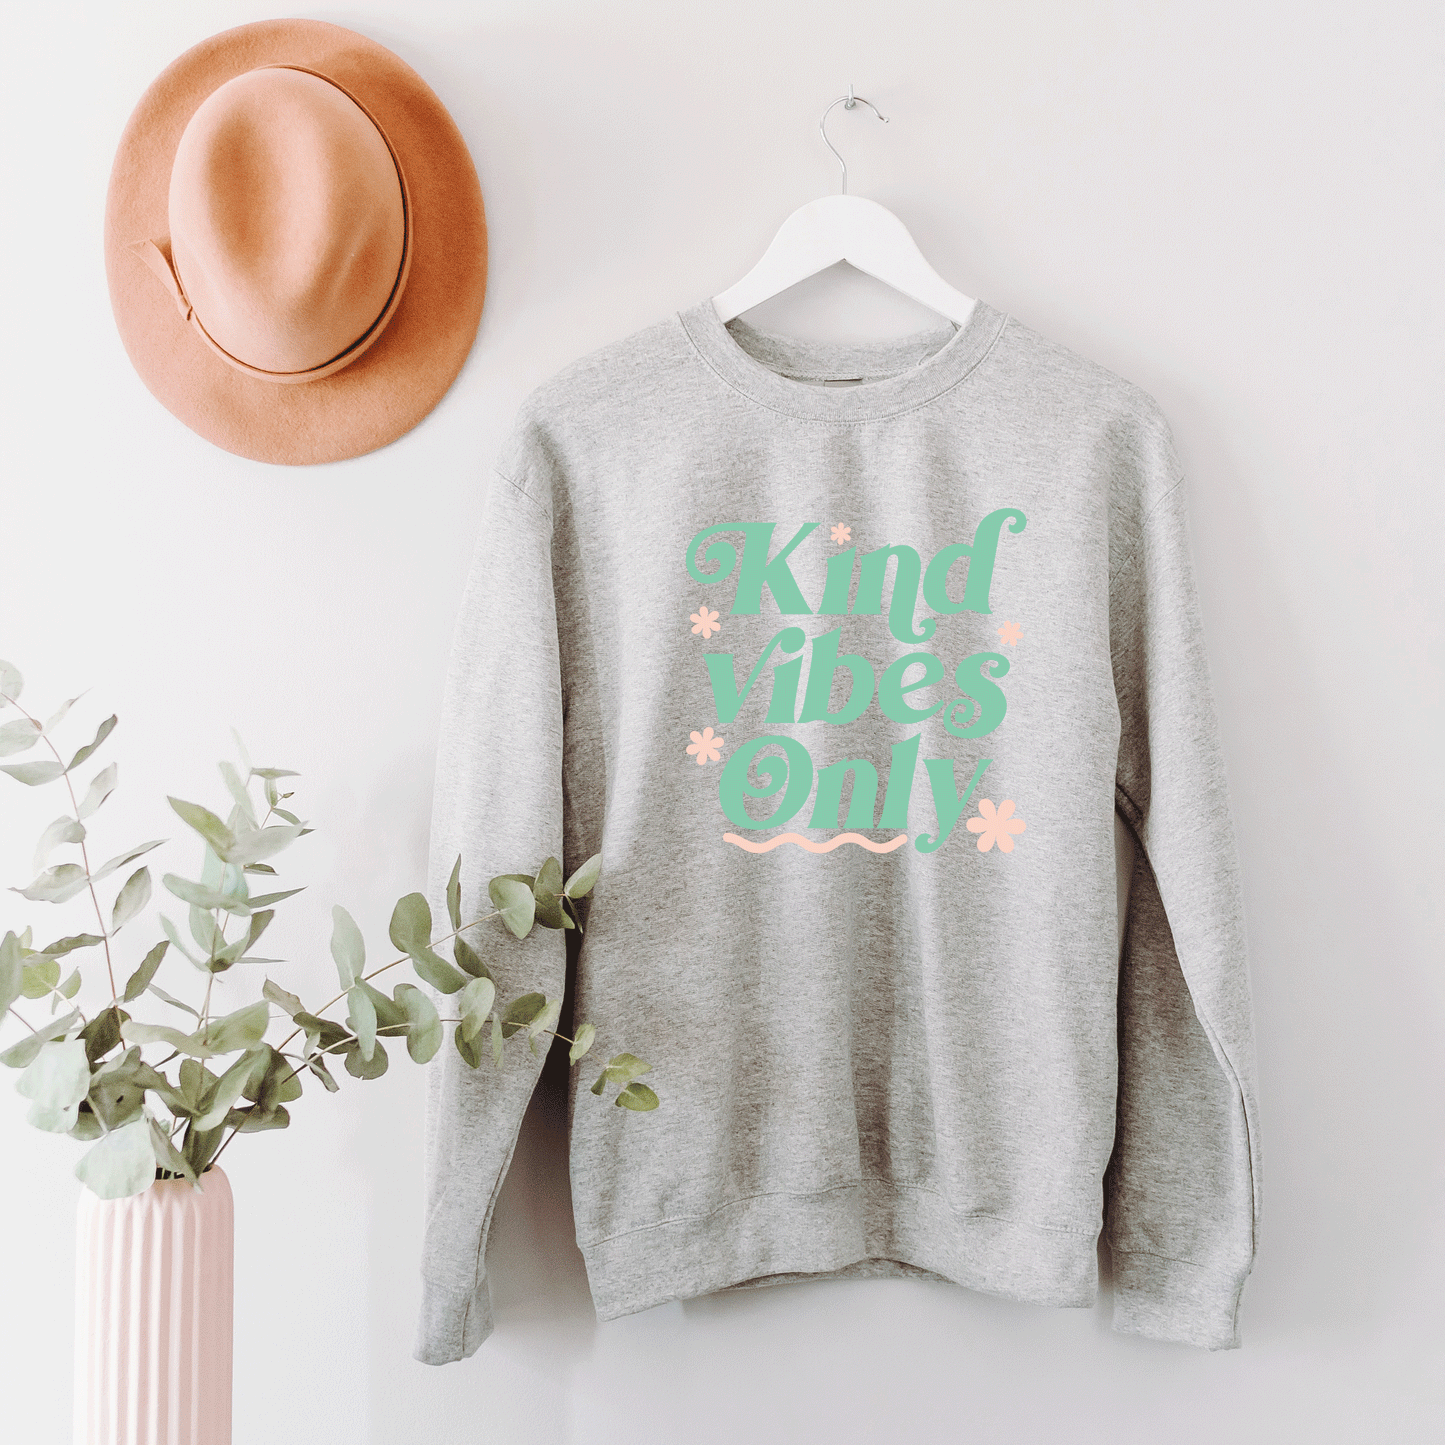 Kind Vibes Only | Sweatshirt